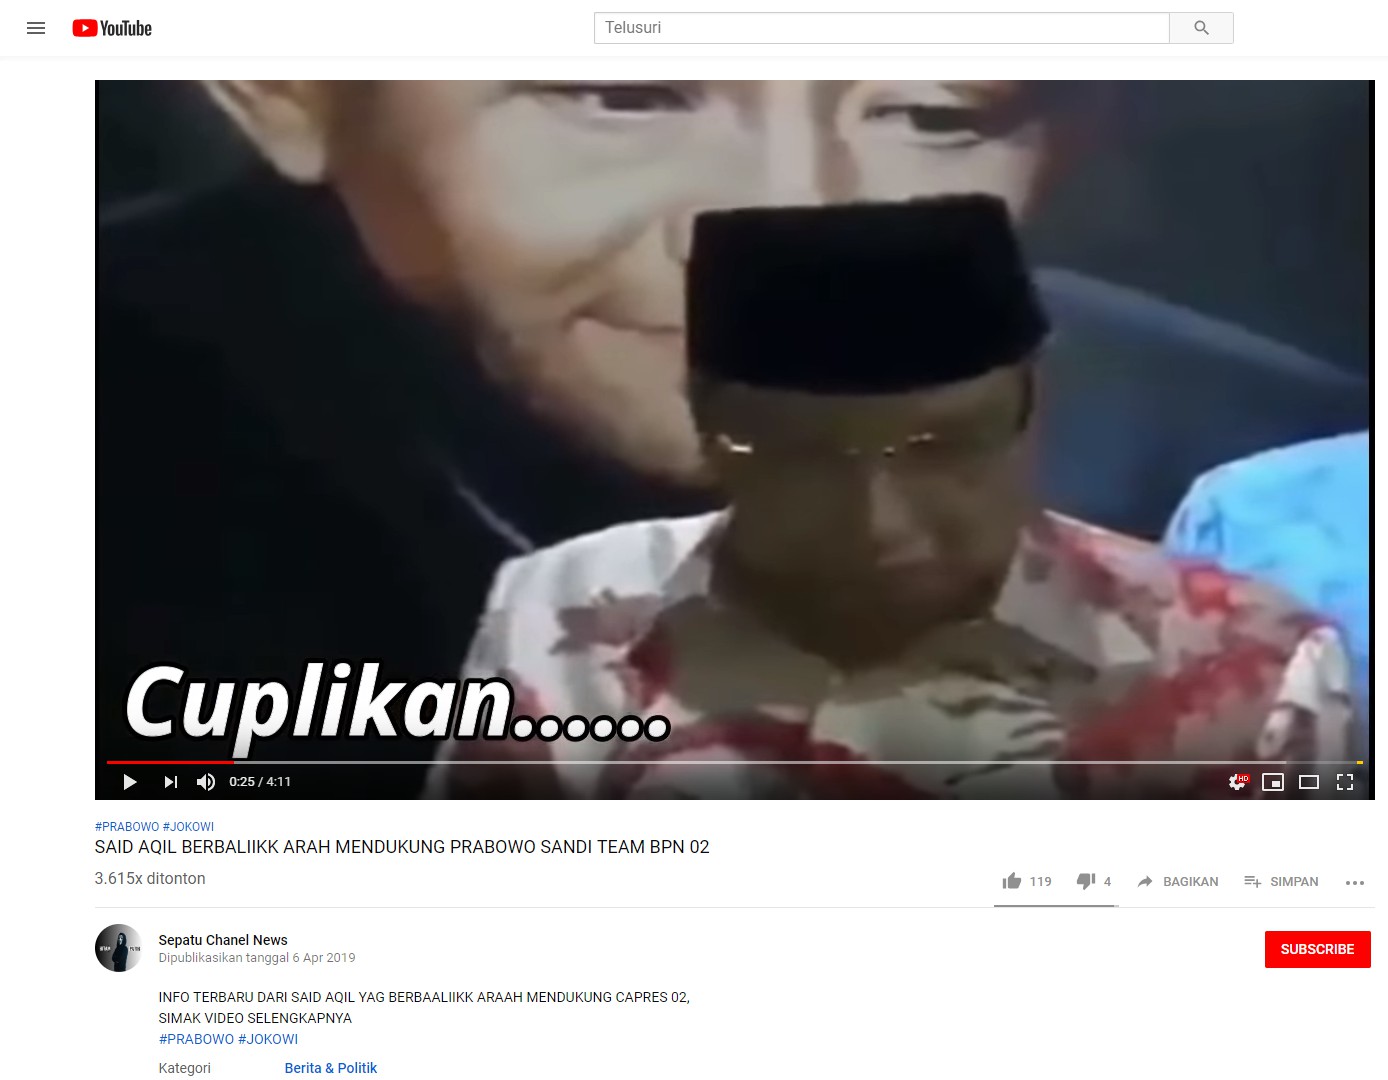 [SALAH] Video Said Aqil Siradj Dukung Prabowo